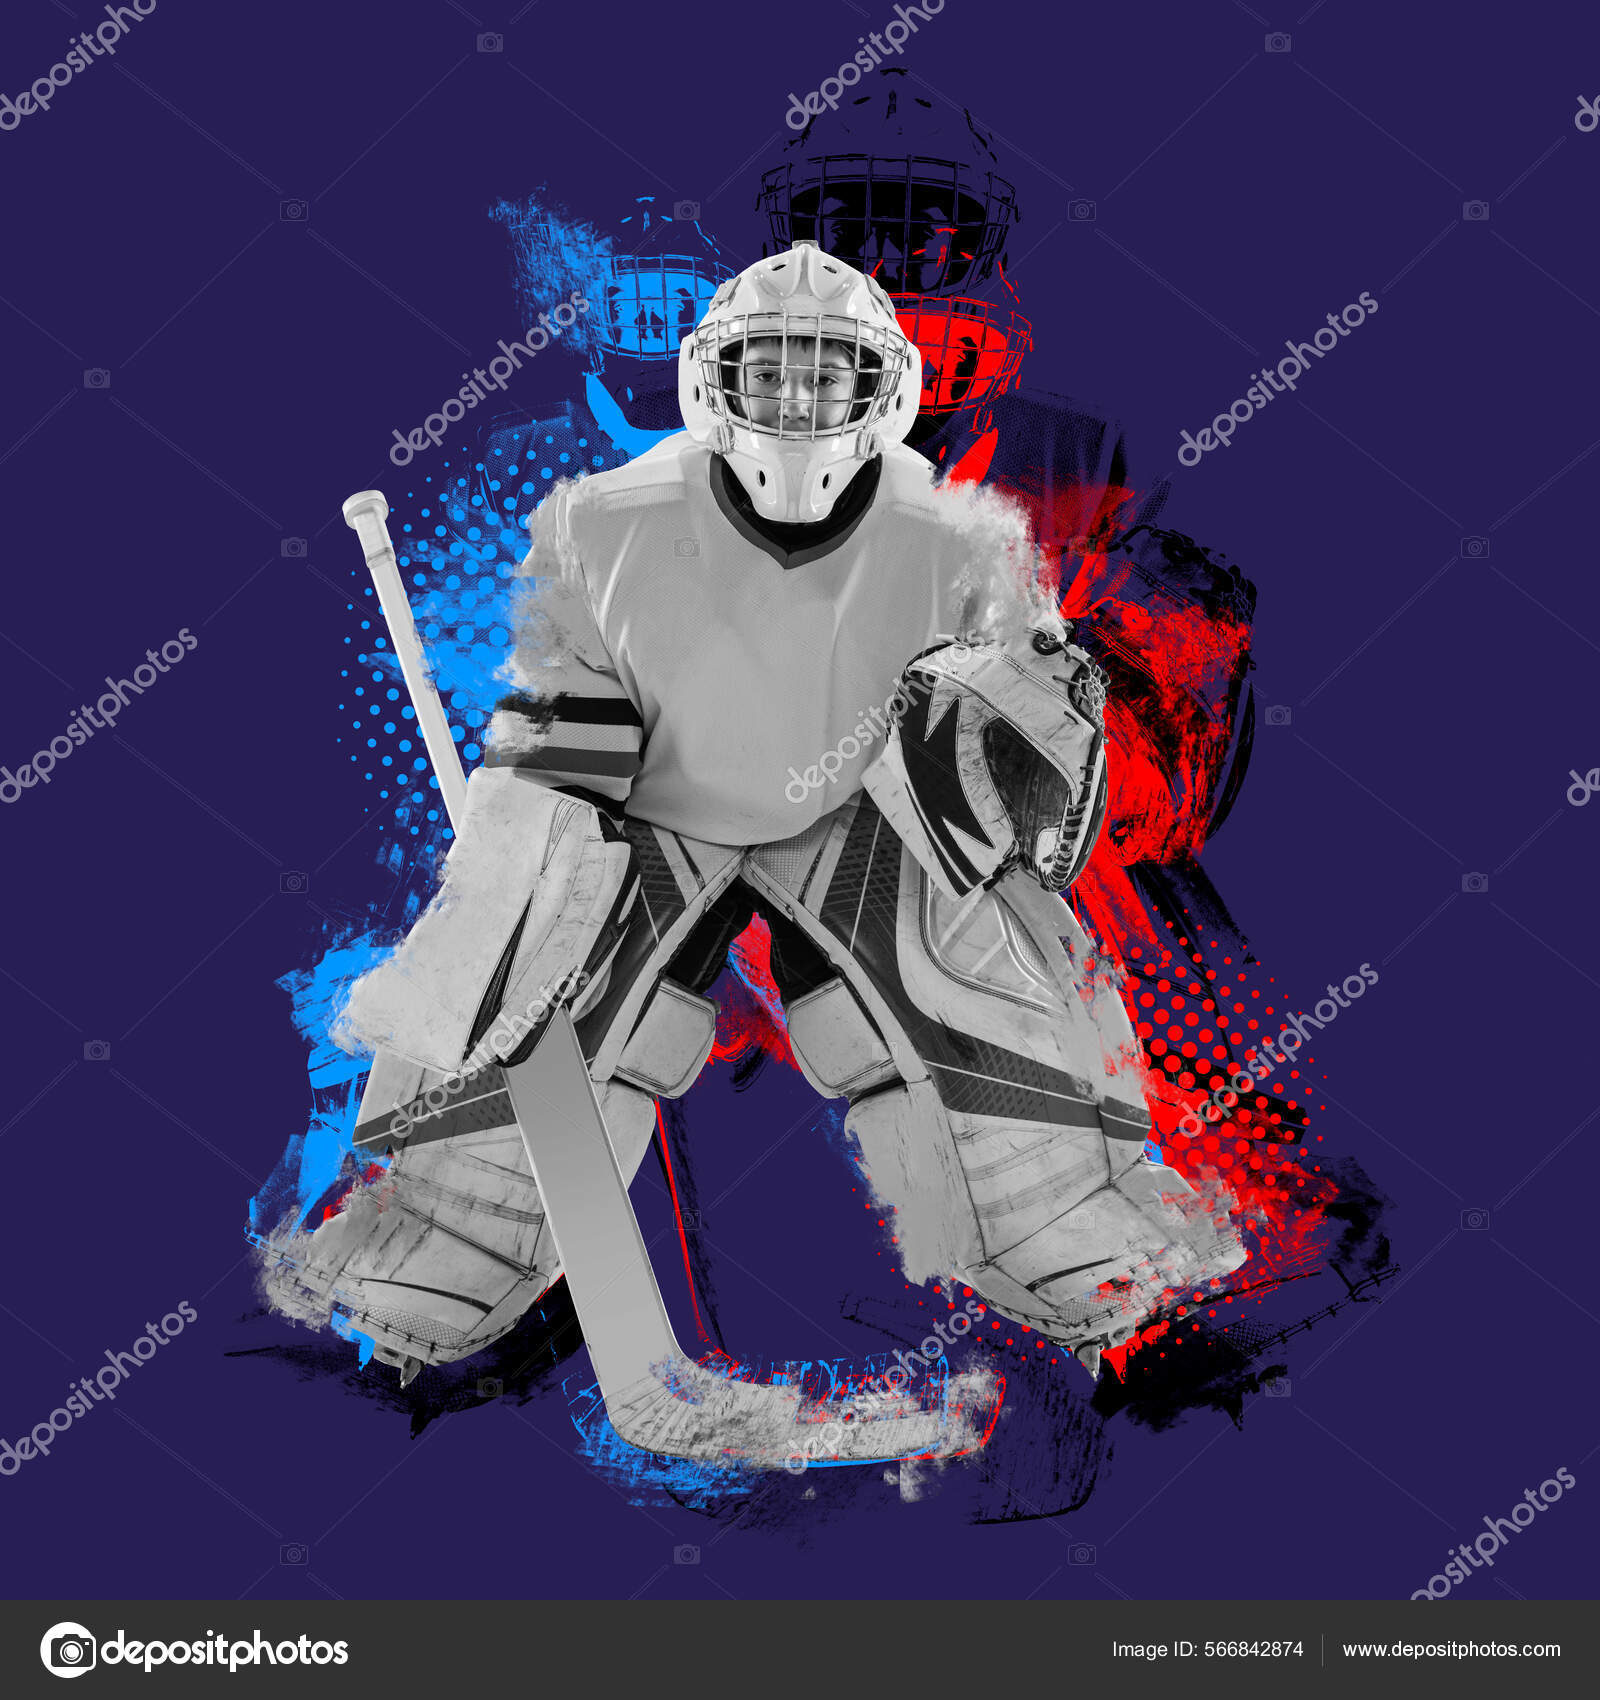 Ice Hockey Goalie Neon Style Stock Vector Illustration and Royalty Free Ice Hockey  Goalie Neon Style Clipart